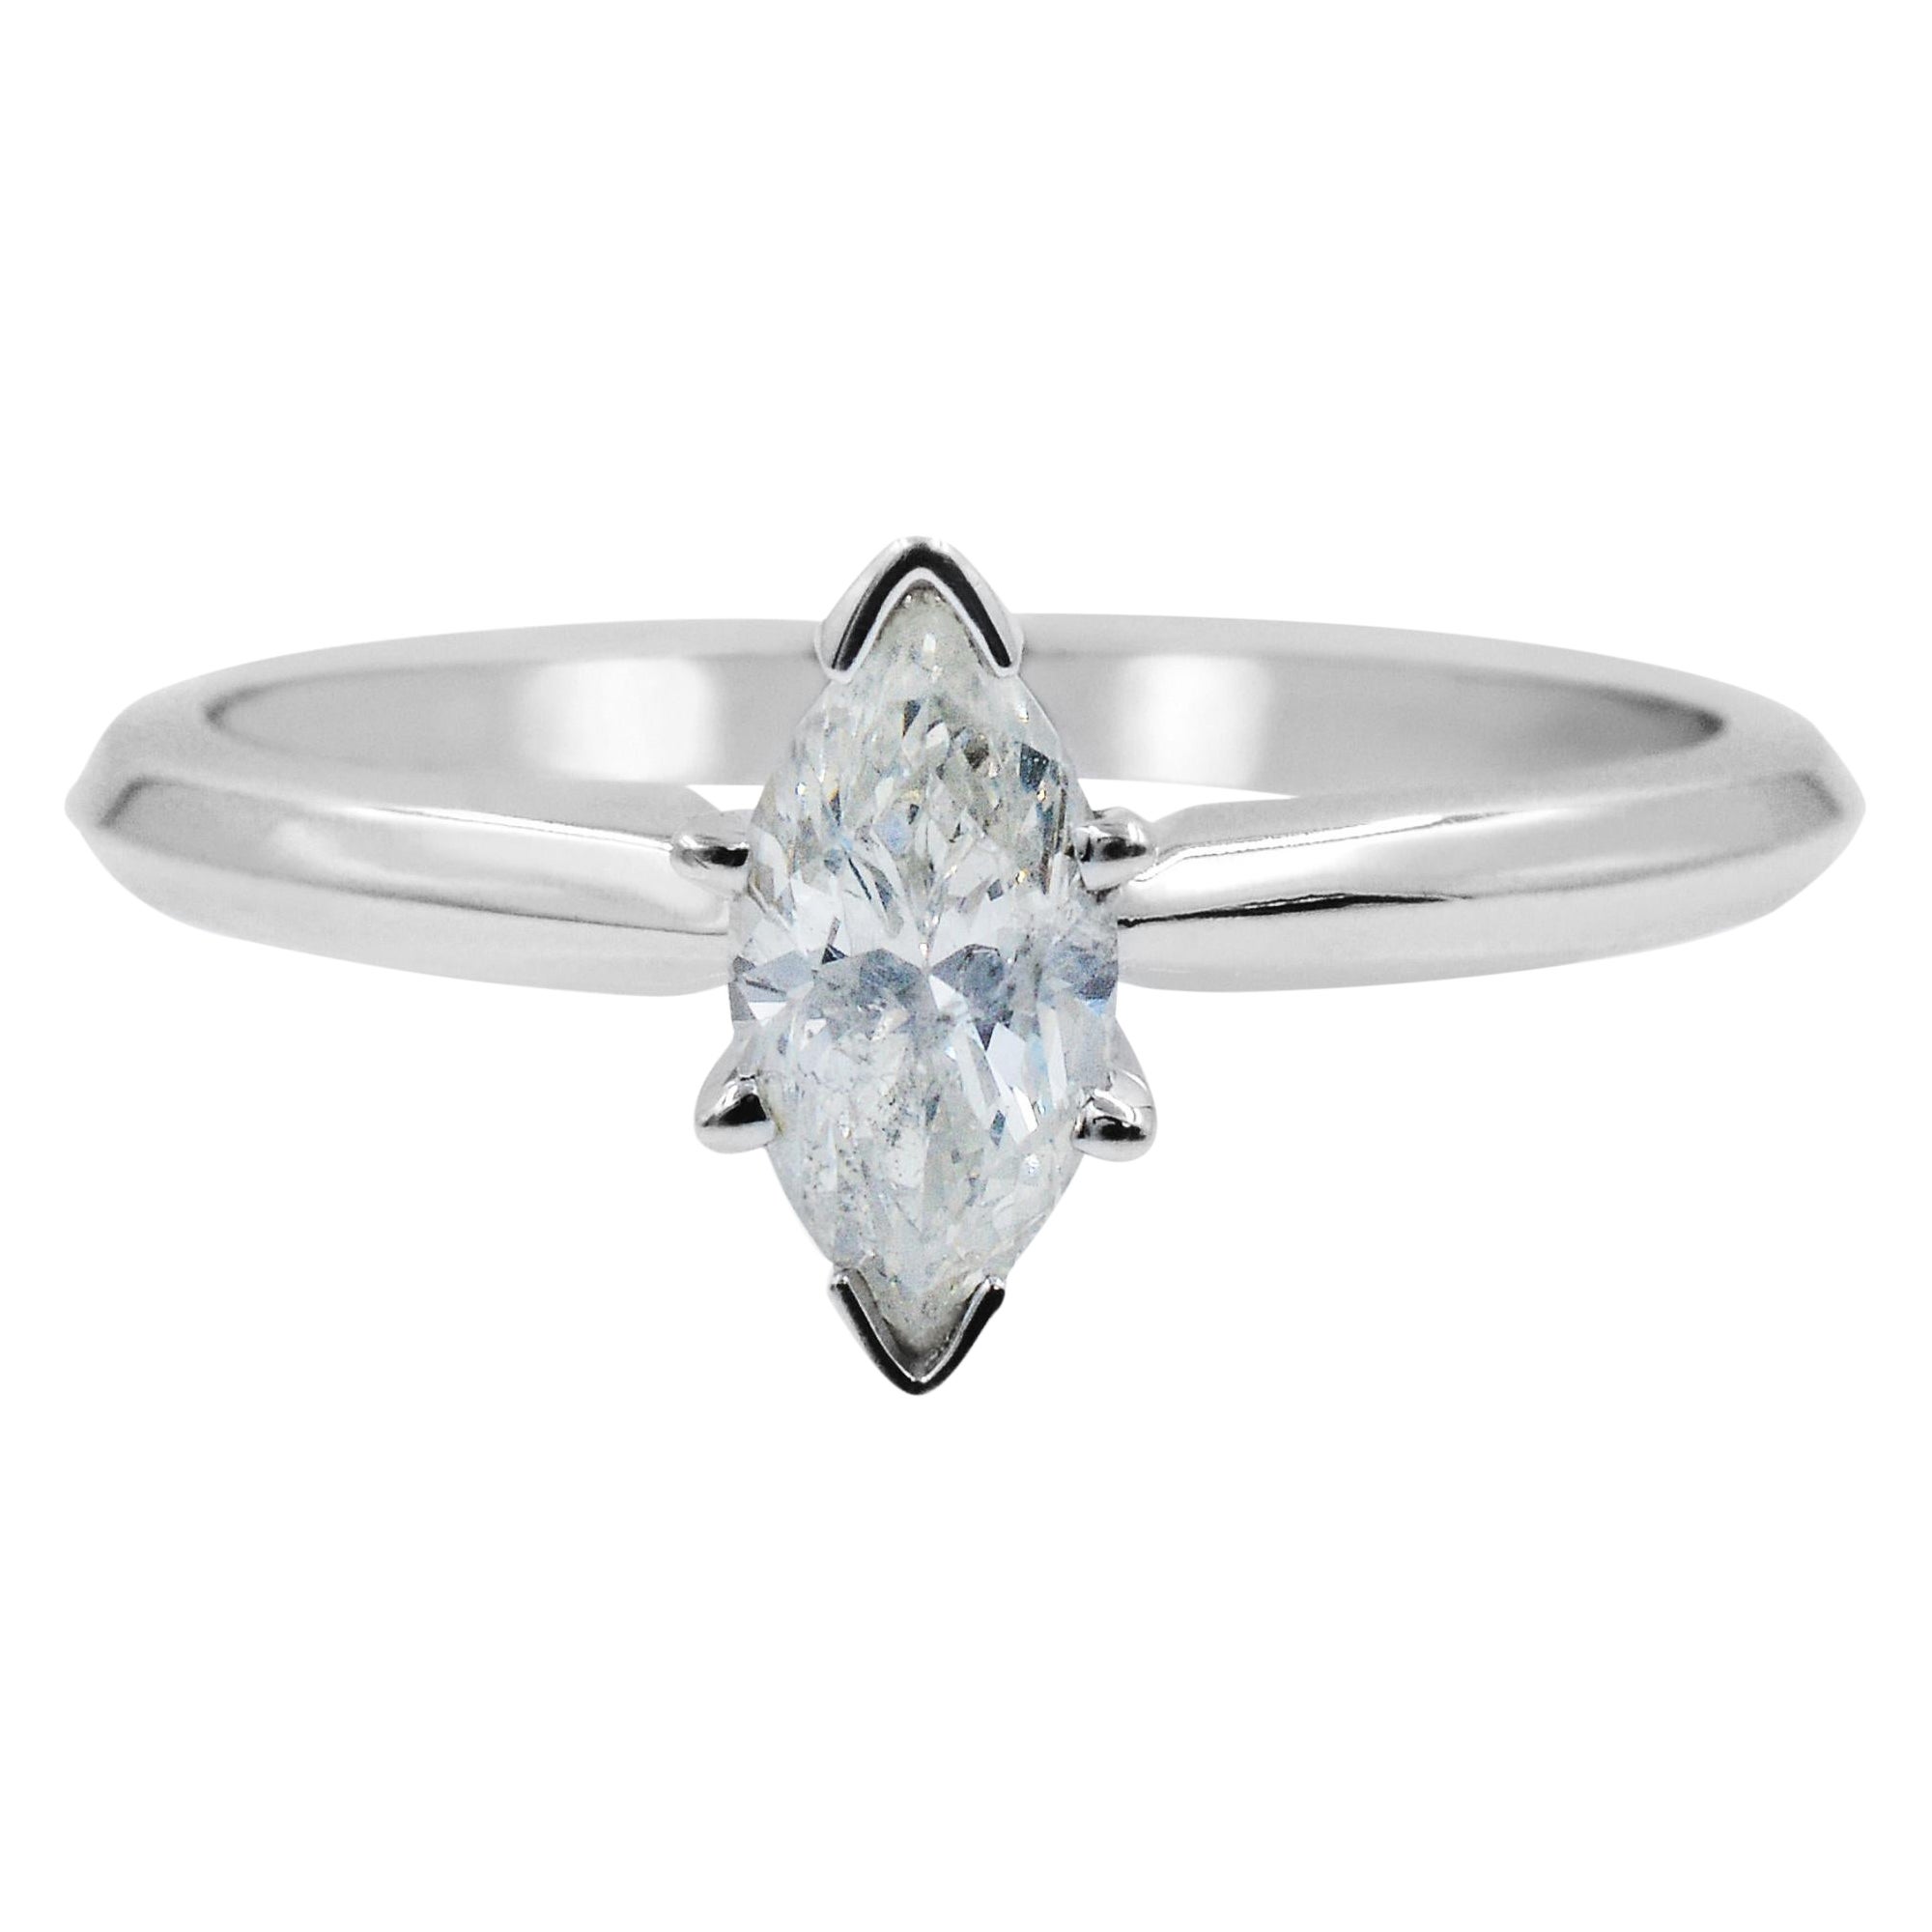 Rachel Koen Marquise Cut Diamond Engagement Ring 14K White Gold 0.53Cttw For Sale